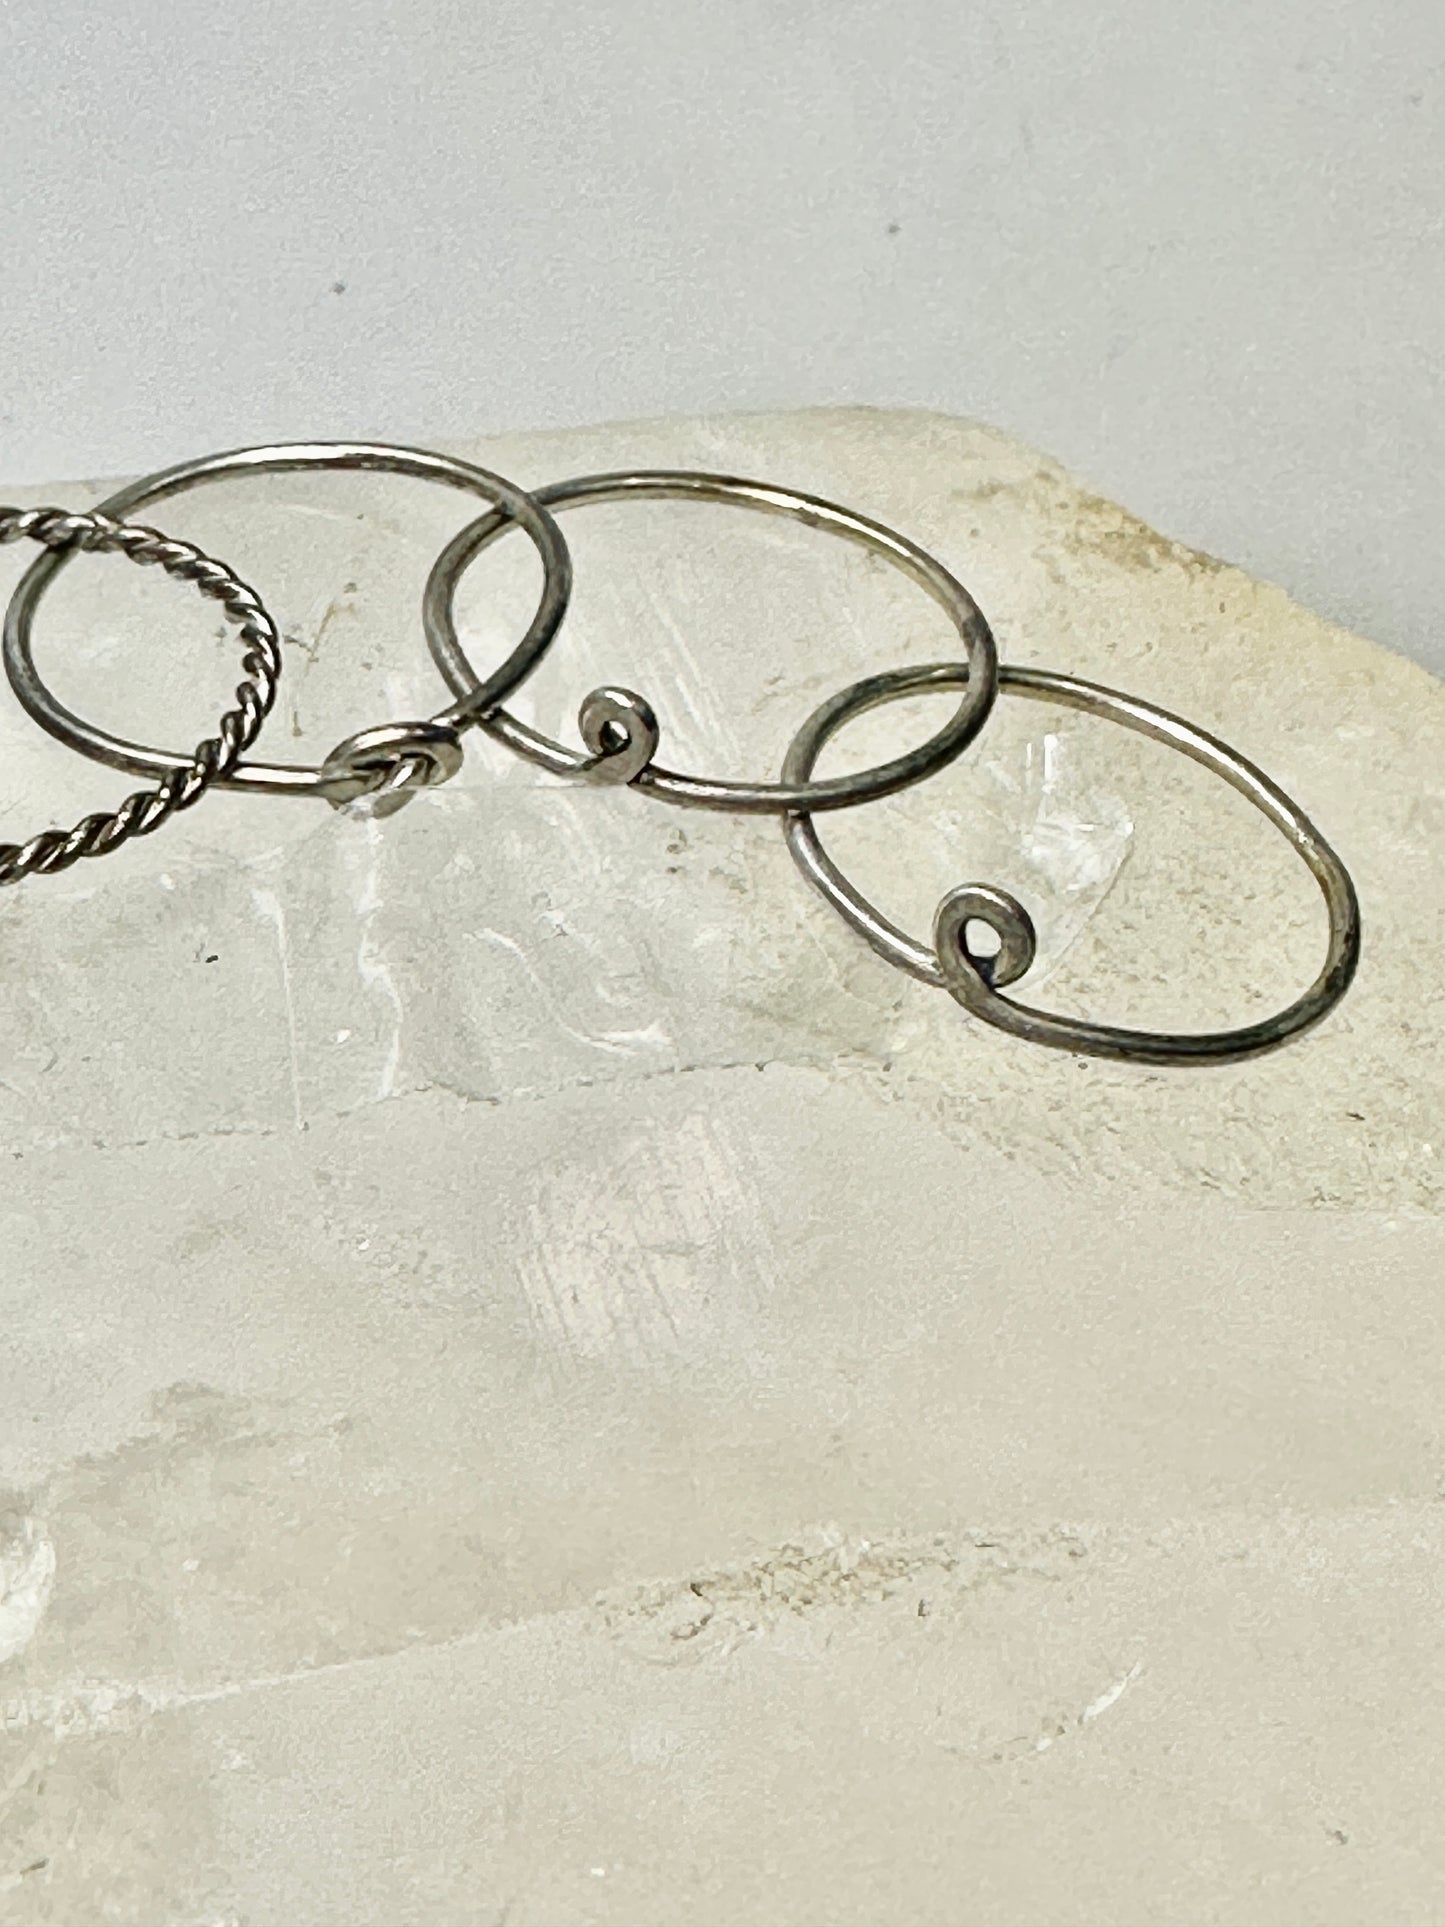 6 Slender ring stacker band size 6 sterling  silver women girls rings bands